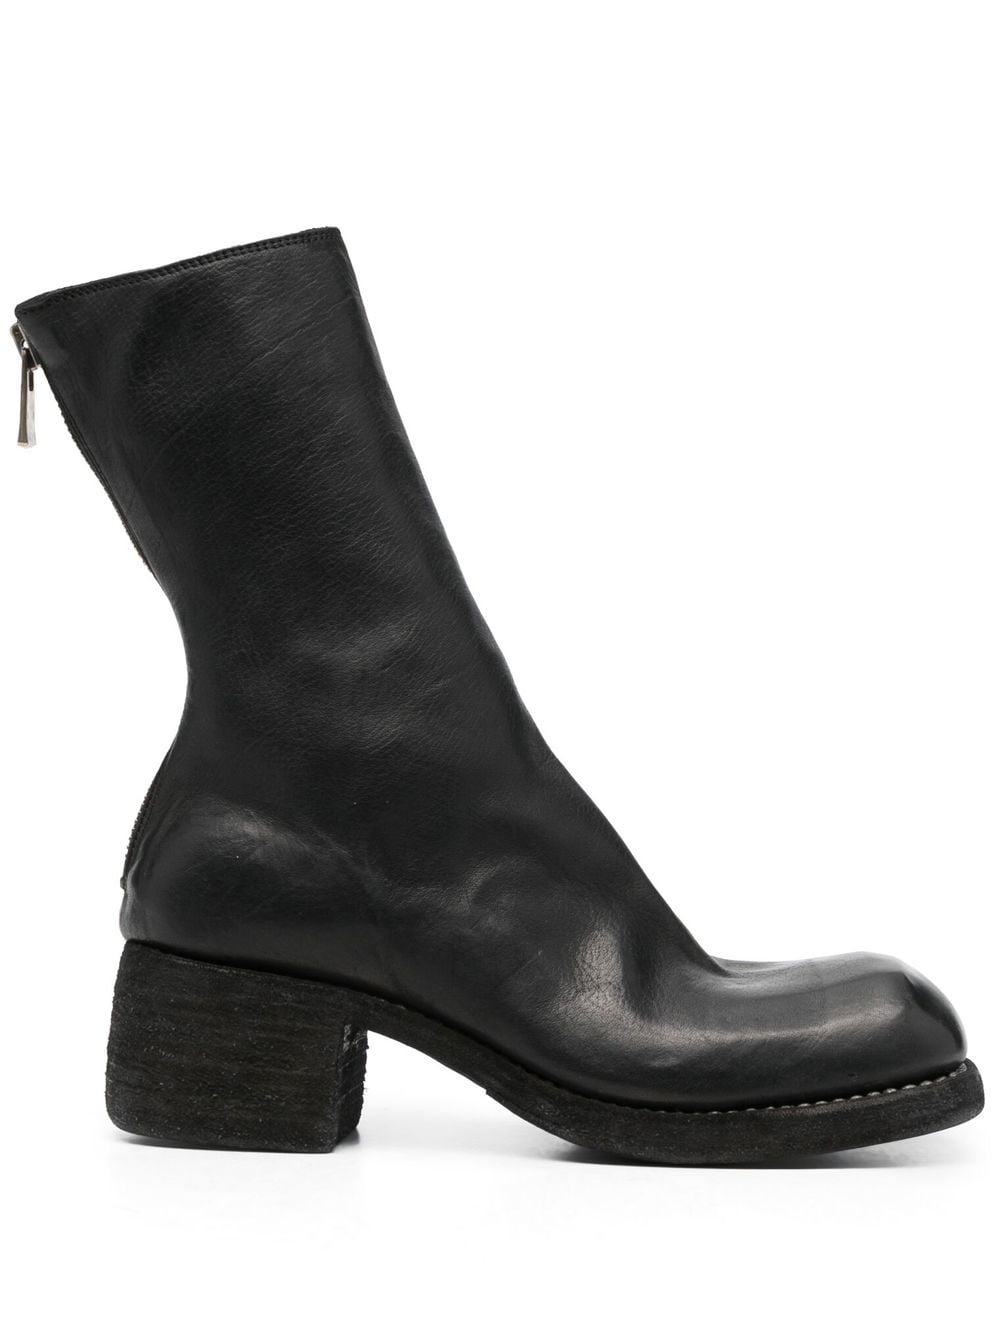 GUIDI Open Toe Soft Leather Biker Knee High Zipper Boots Heel 9 39.5 9.5